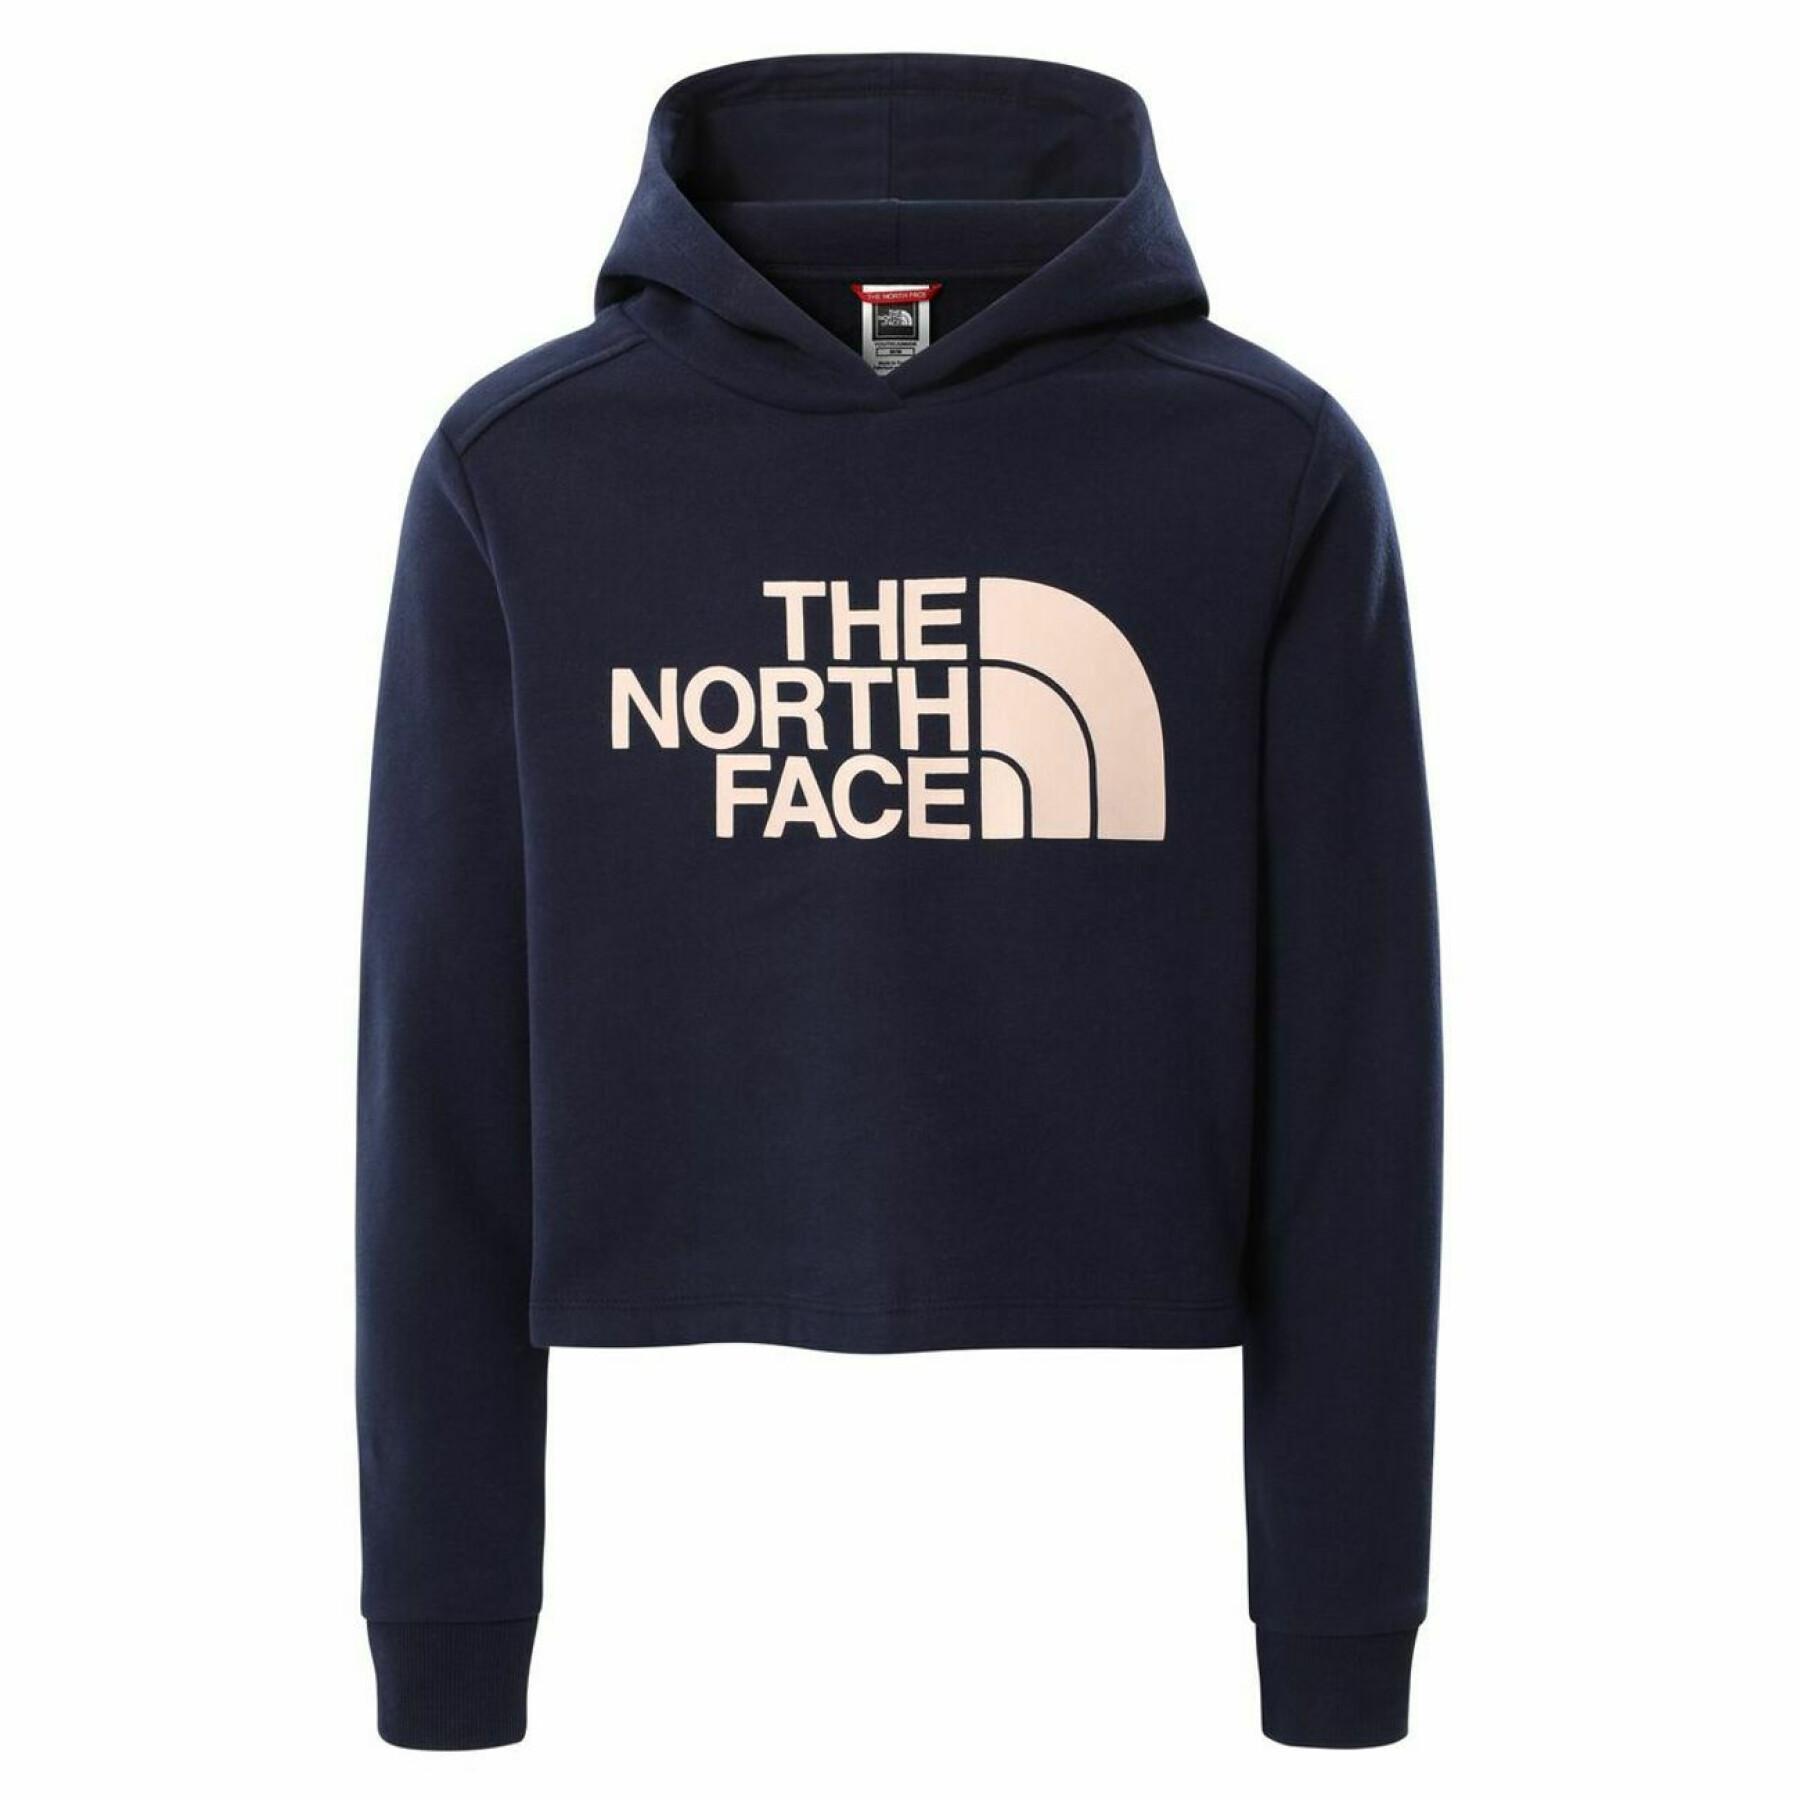 Bluza dziewczęca typu croptop The North Face Coton